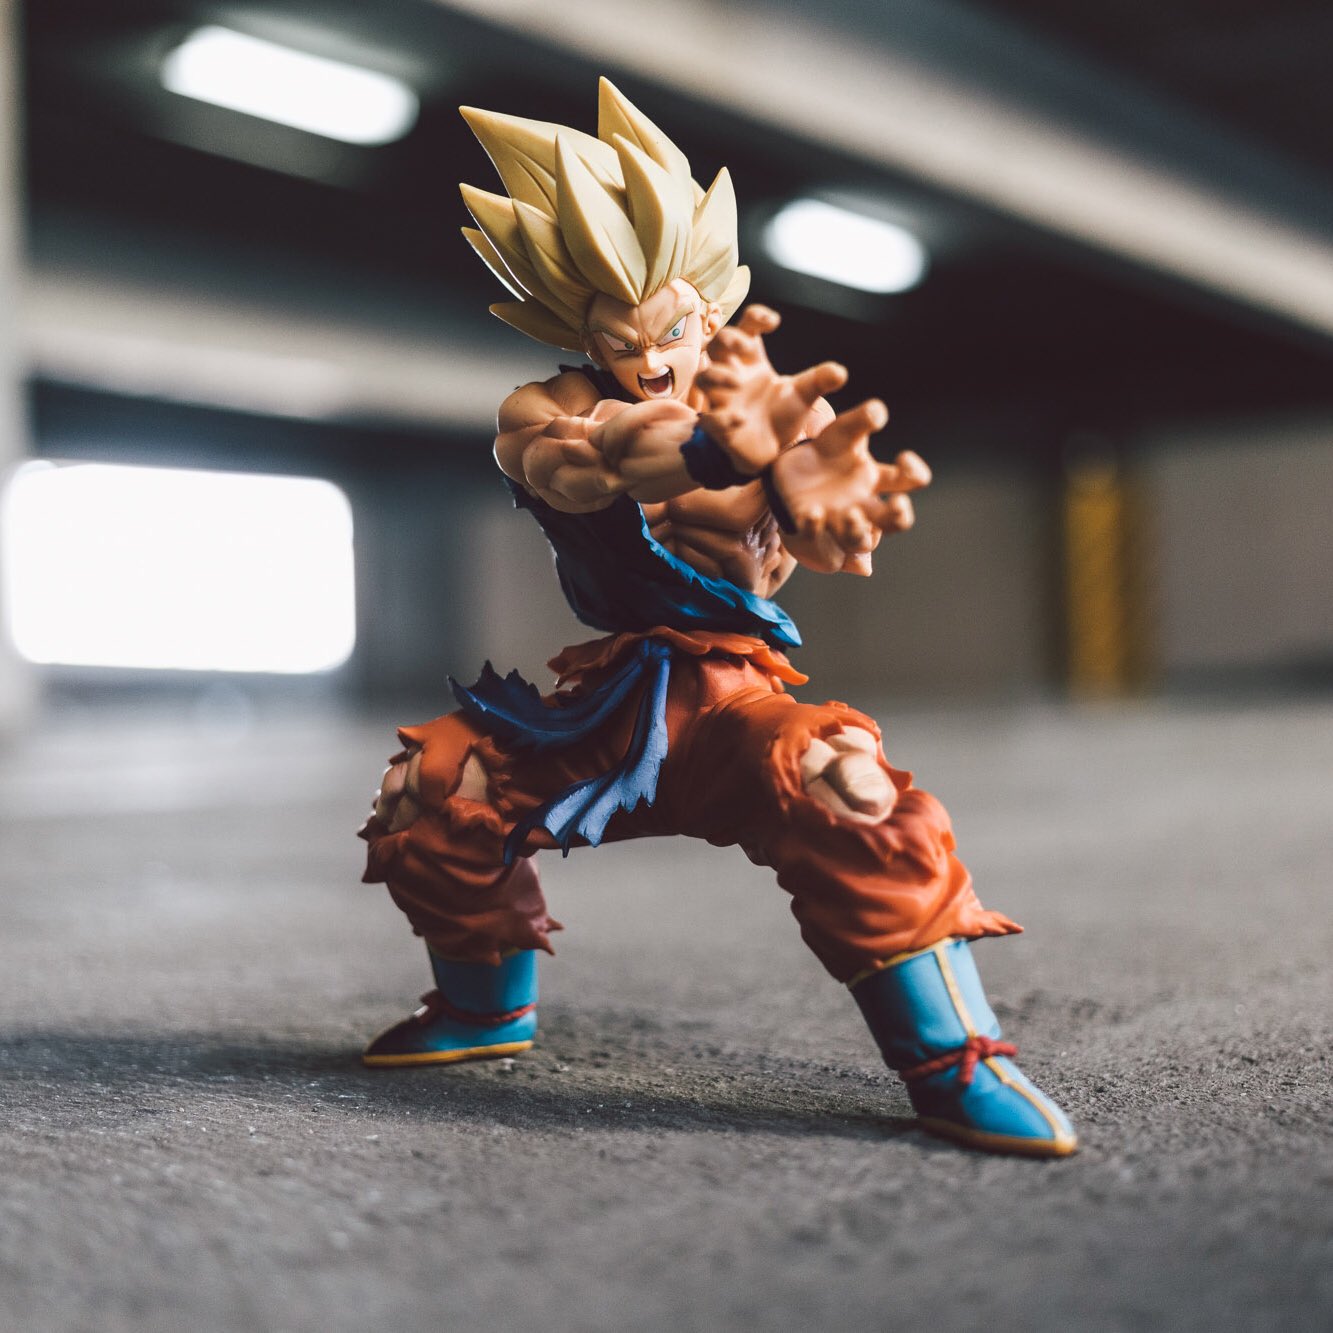 Action Figure Dragon Ball - Legends Goku